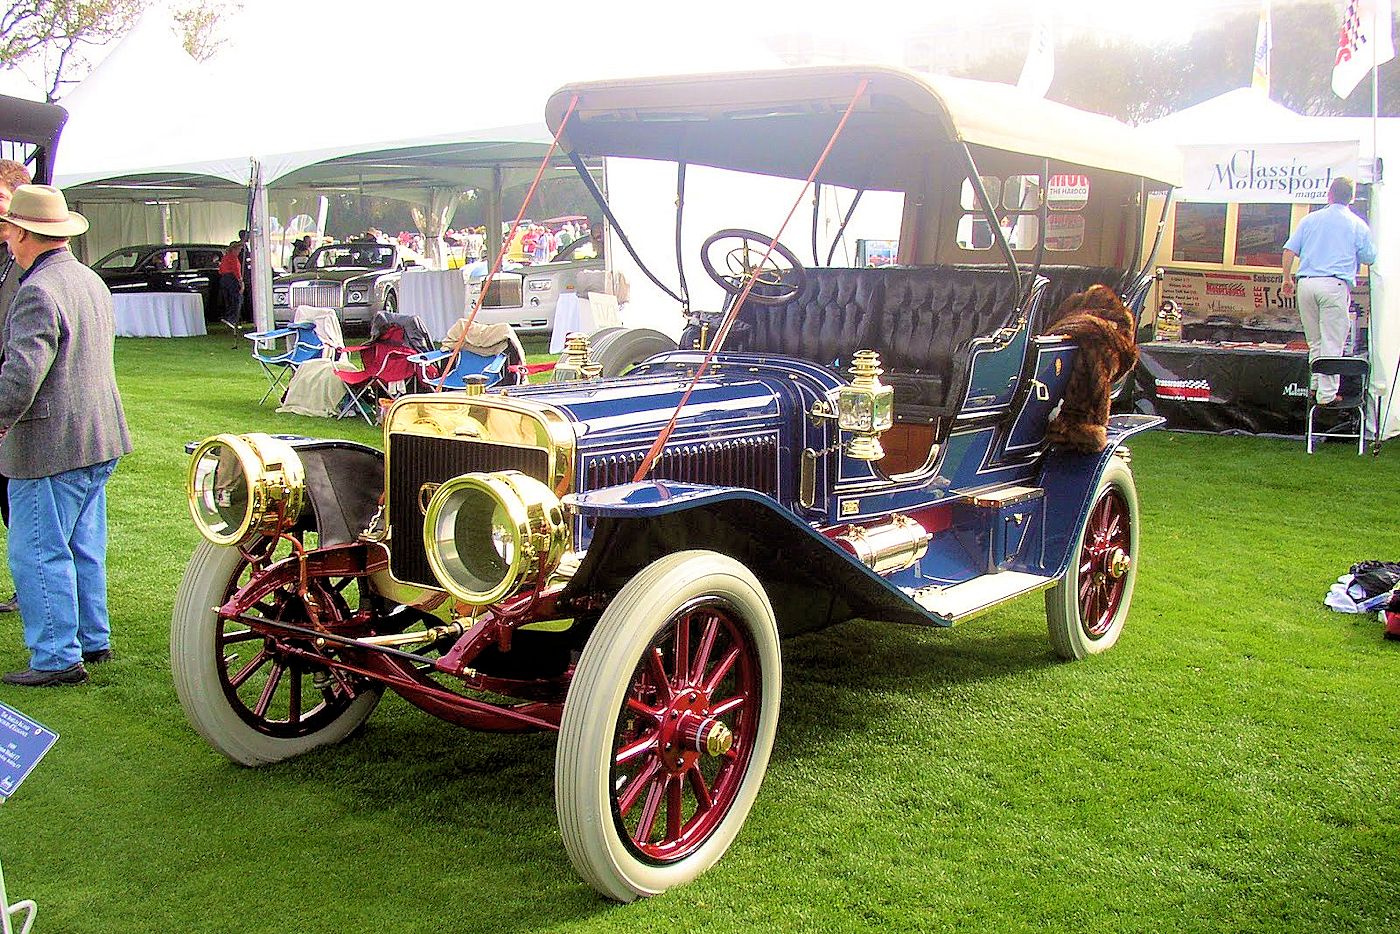 1909 Winton Best of Show Amelia Island 2009 Horseless Carriage - Laidlaw Antique Auto Retoration